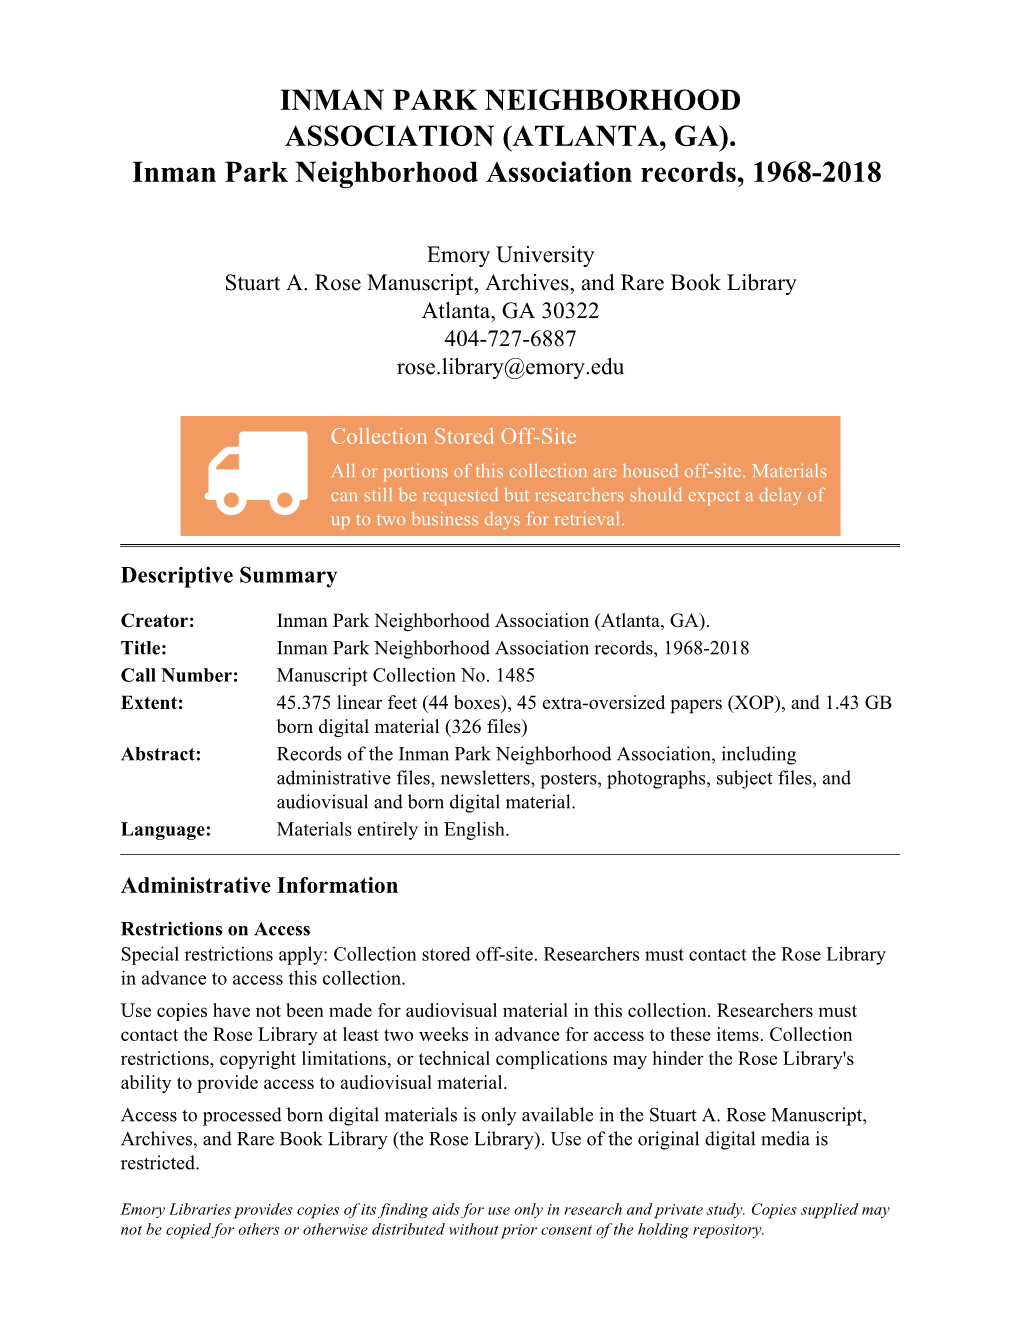 Inman Park Neighborhood Association (Atlanta, Ga)